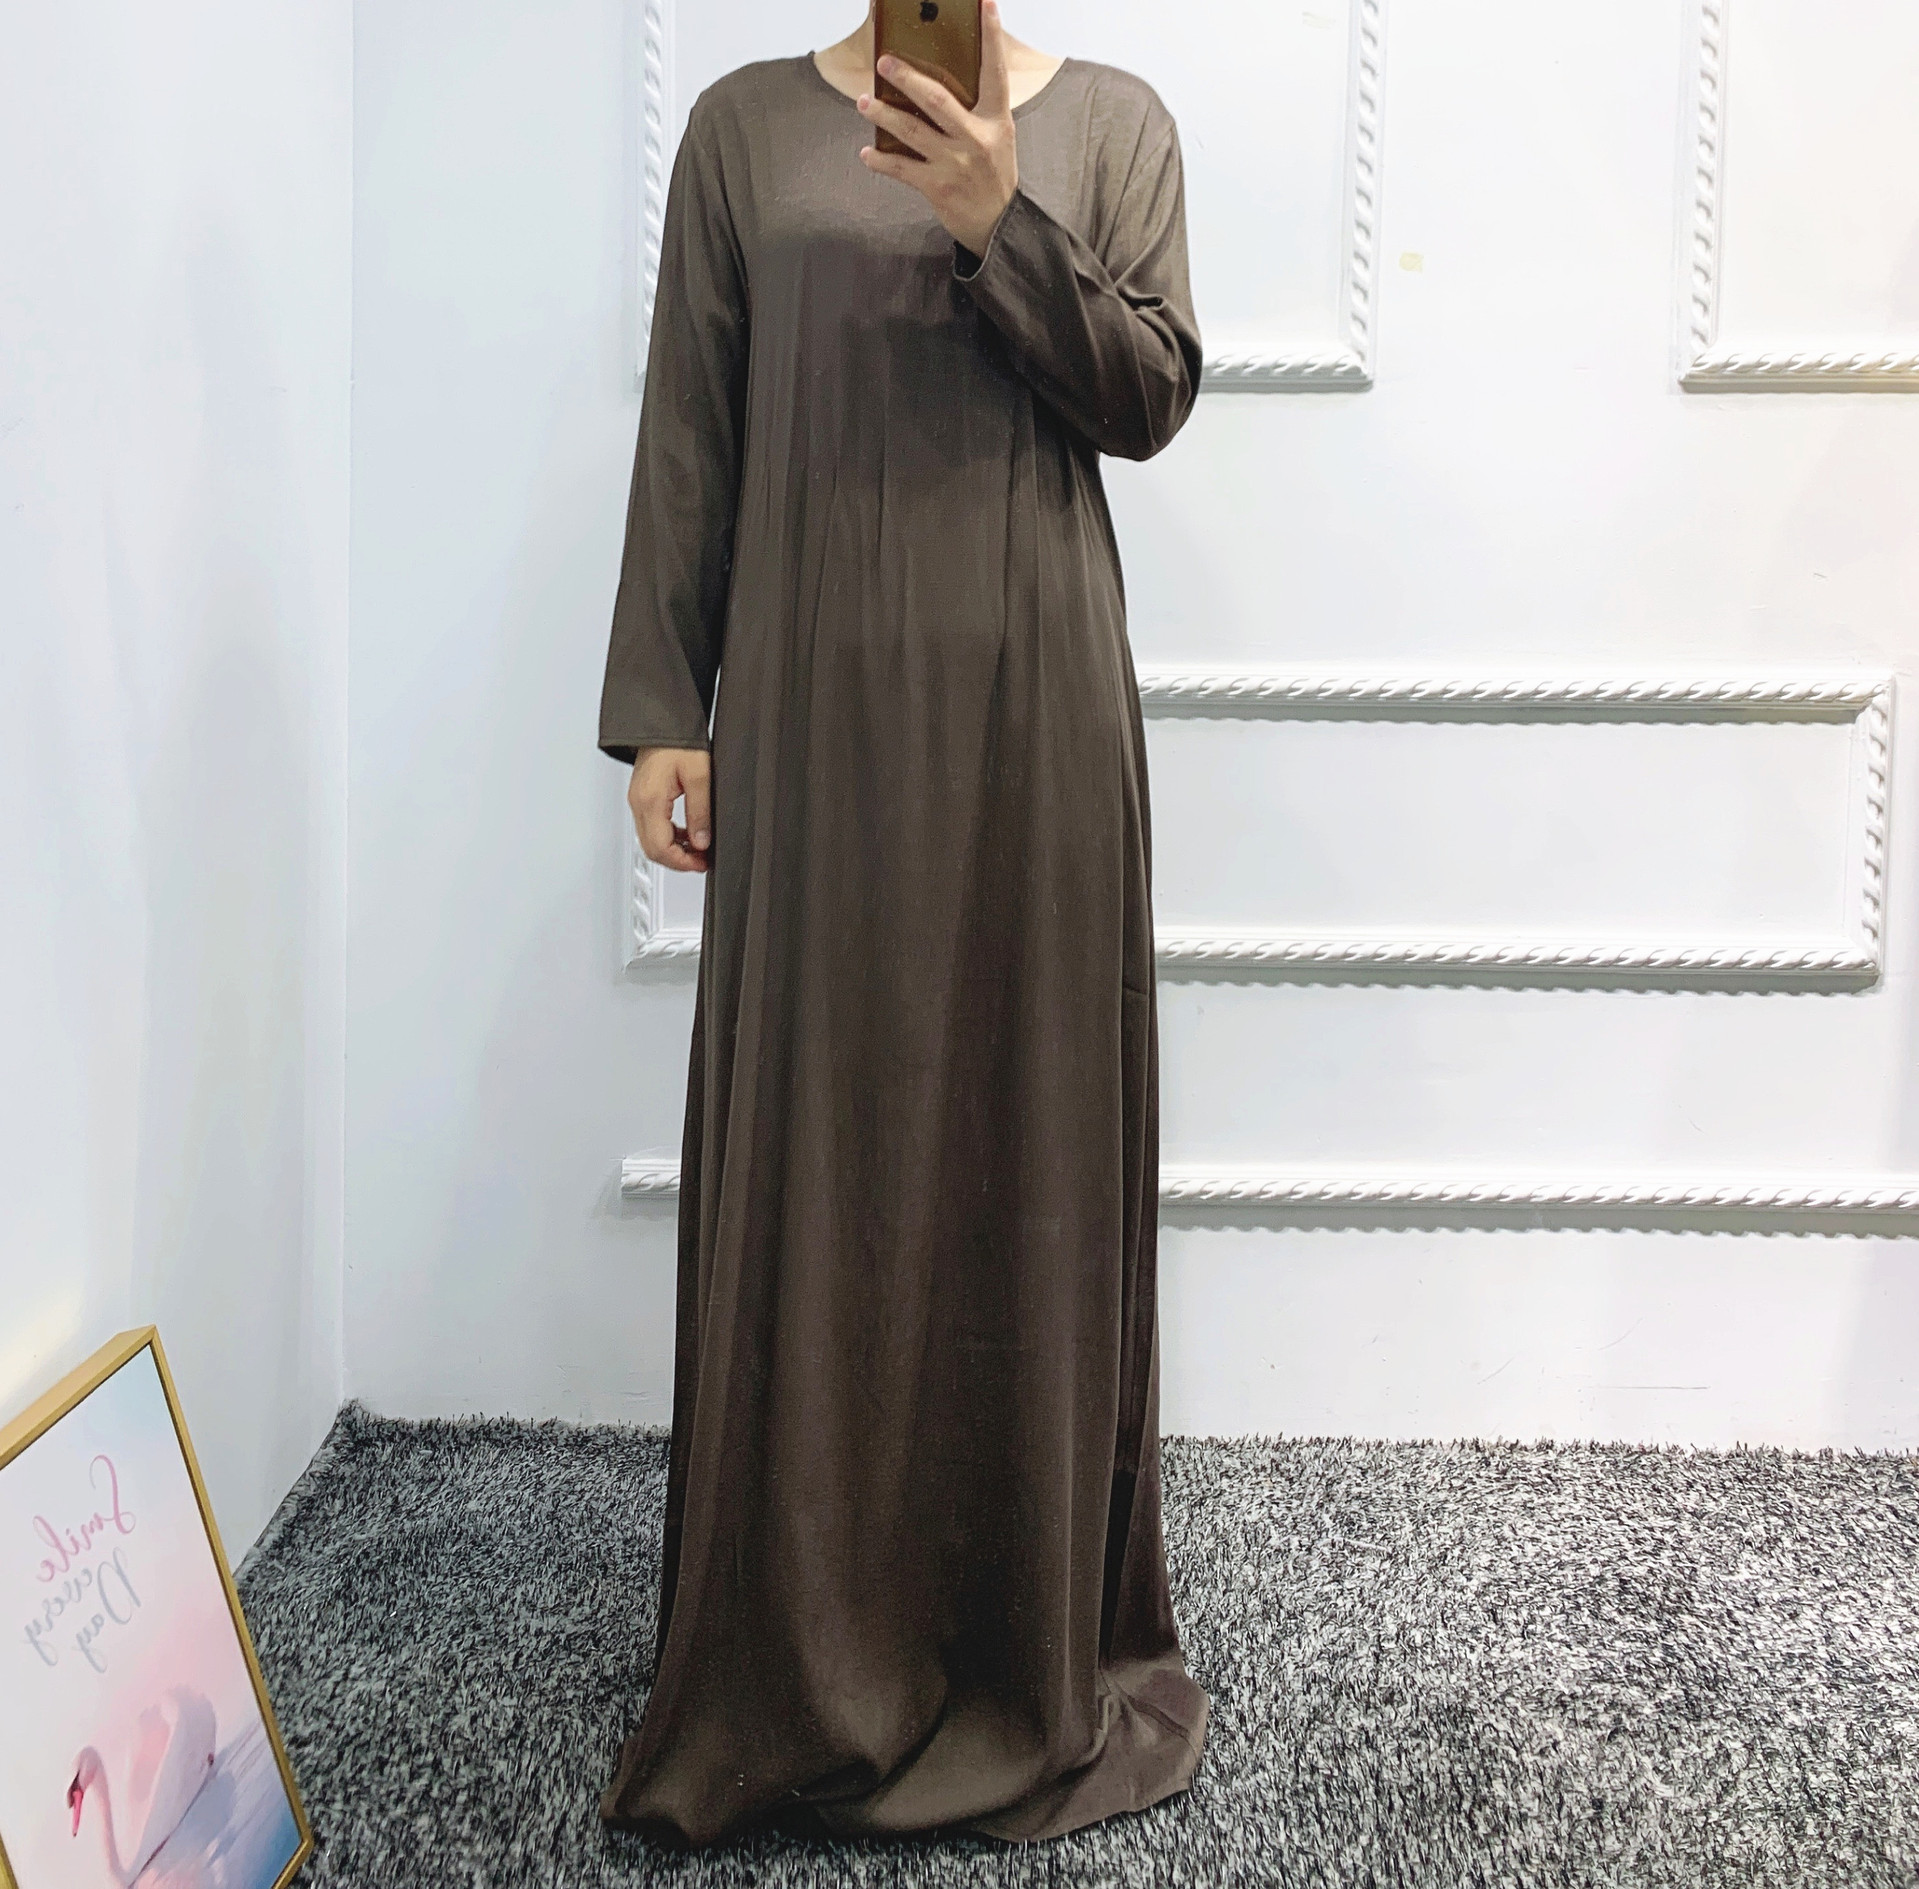 3Pcs Matching Set Women Muslim Abaya Dress fashion Linen Dubai Arabic Modest Outfit islamic Plain cardigan Wrap Front Skirt Eid